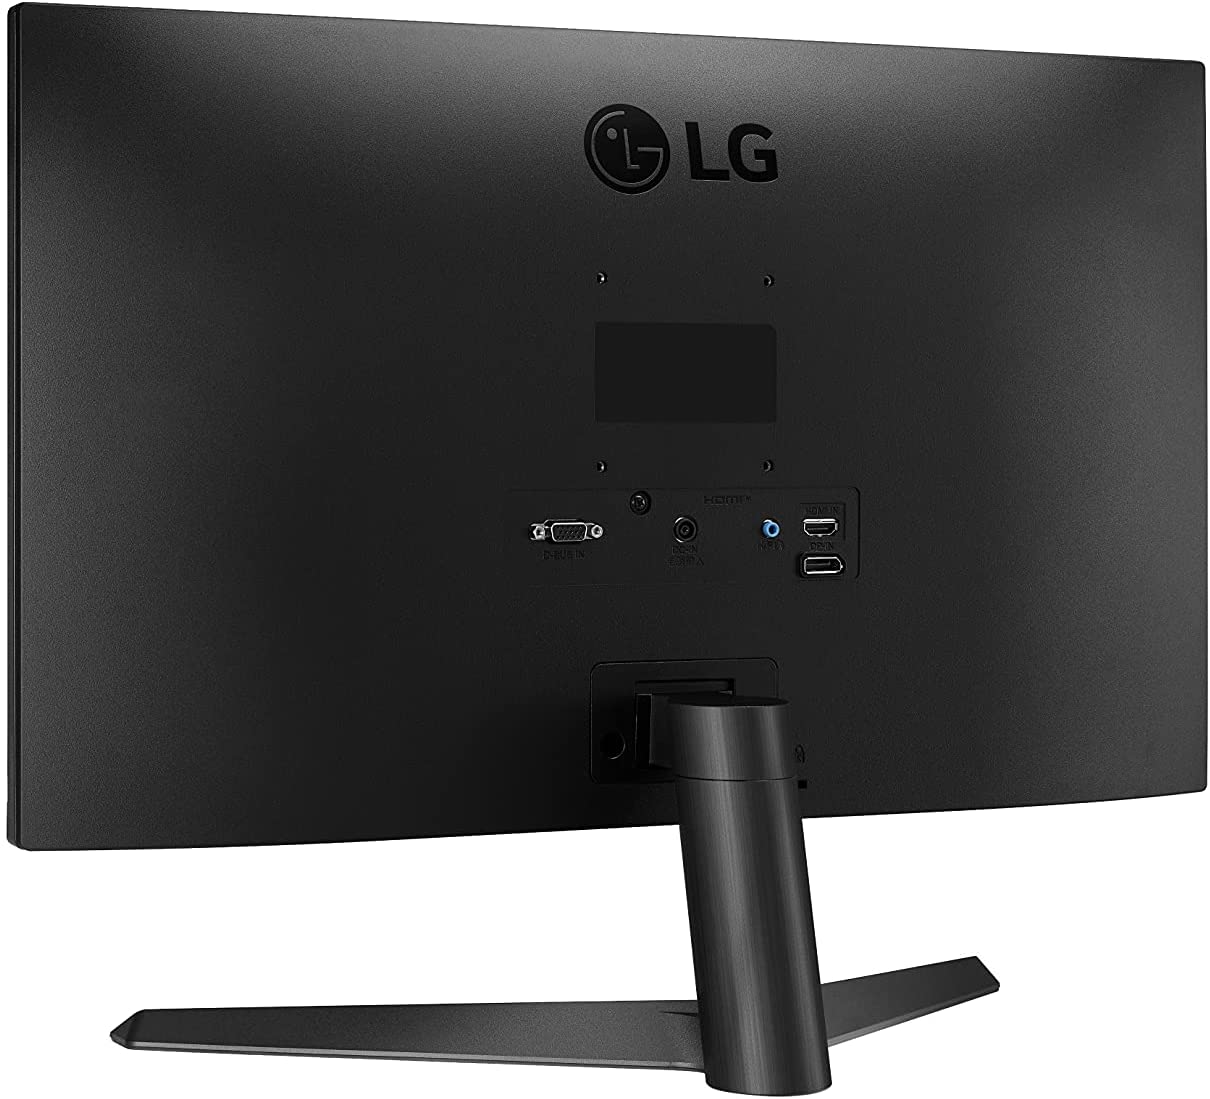 LG 27MP60G-B 27" Full HD IPS Monitor with AMD FreeSync - Black